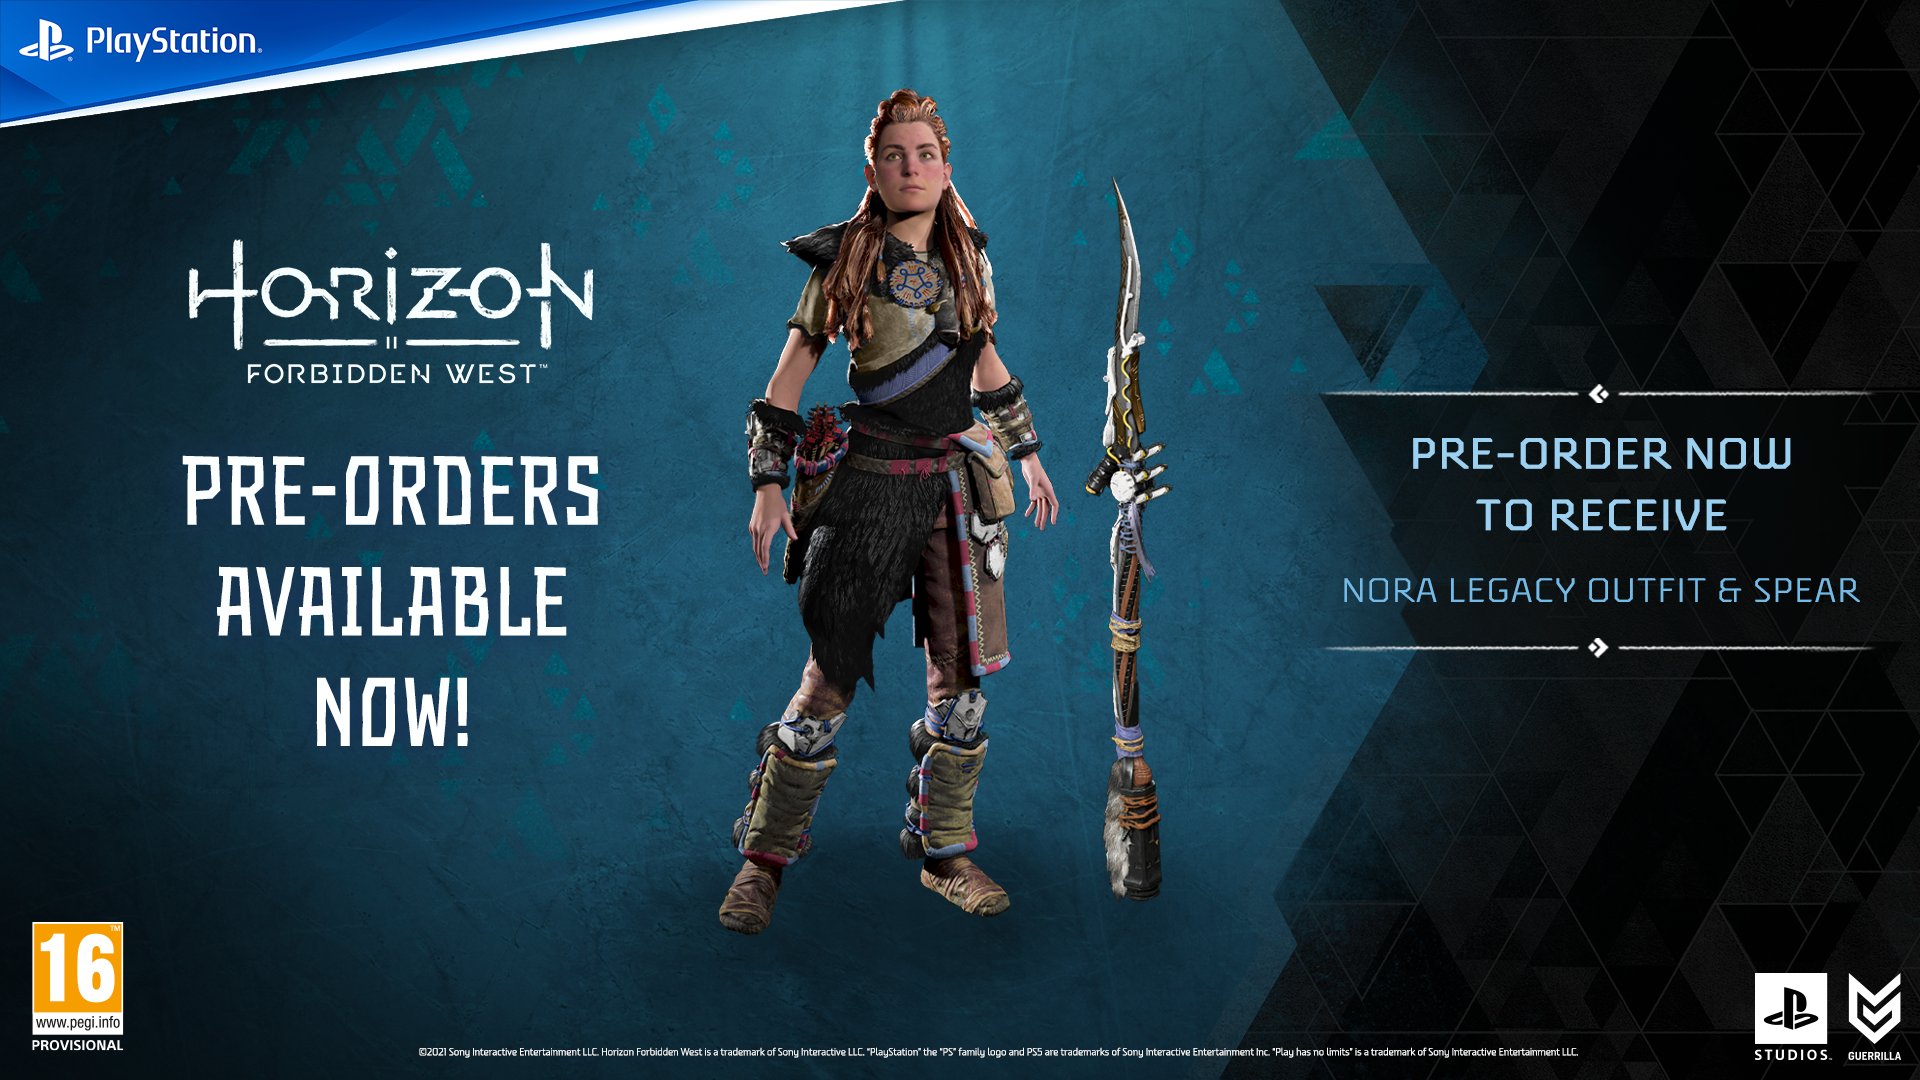 [$ 0.54] Horizon Forbidden West - Pre-Order Bonus DLC EU PS4 CD Key